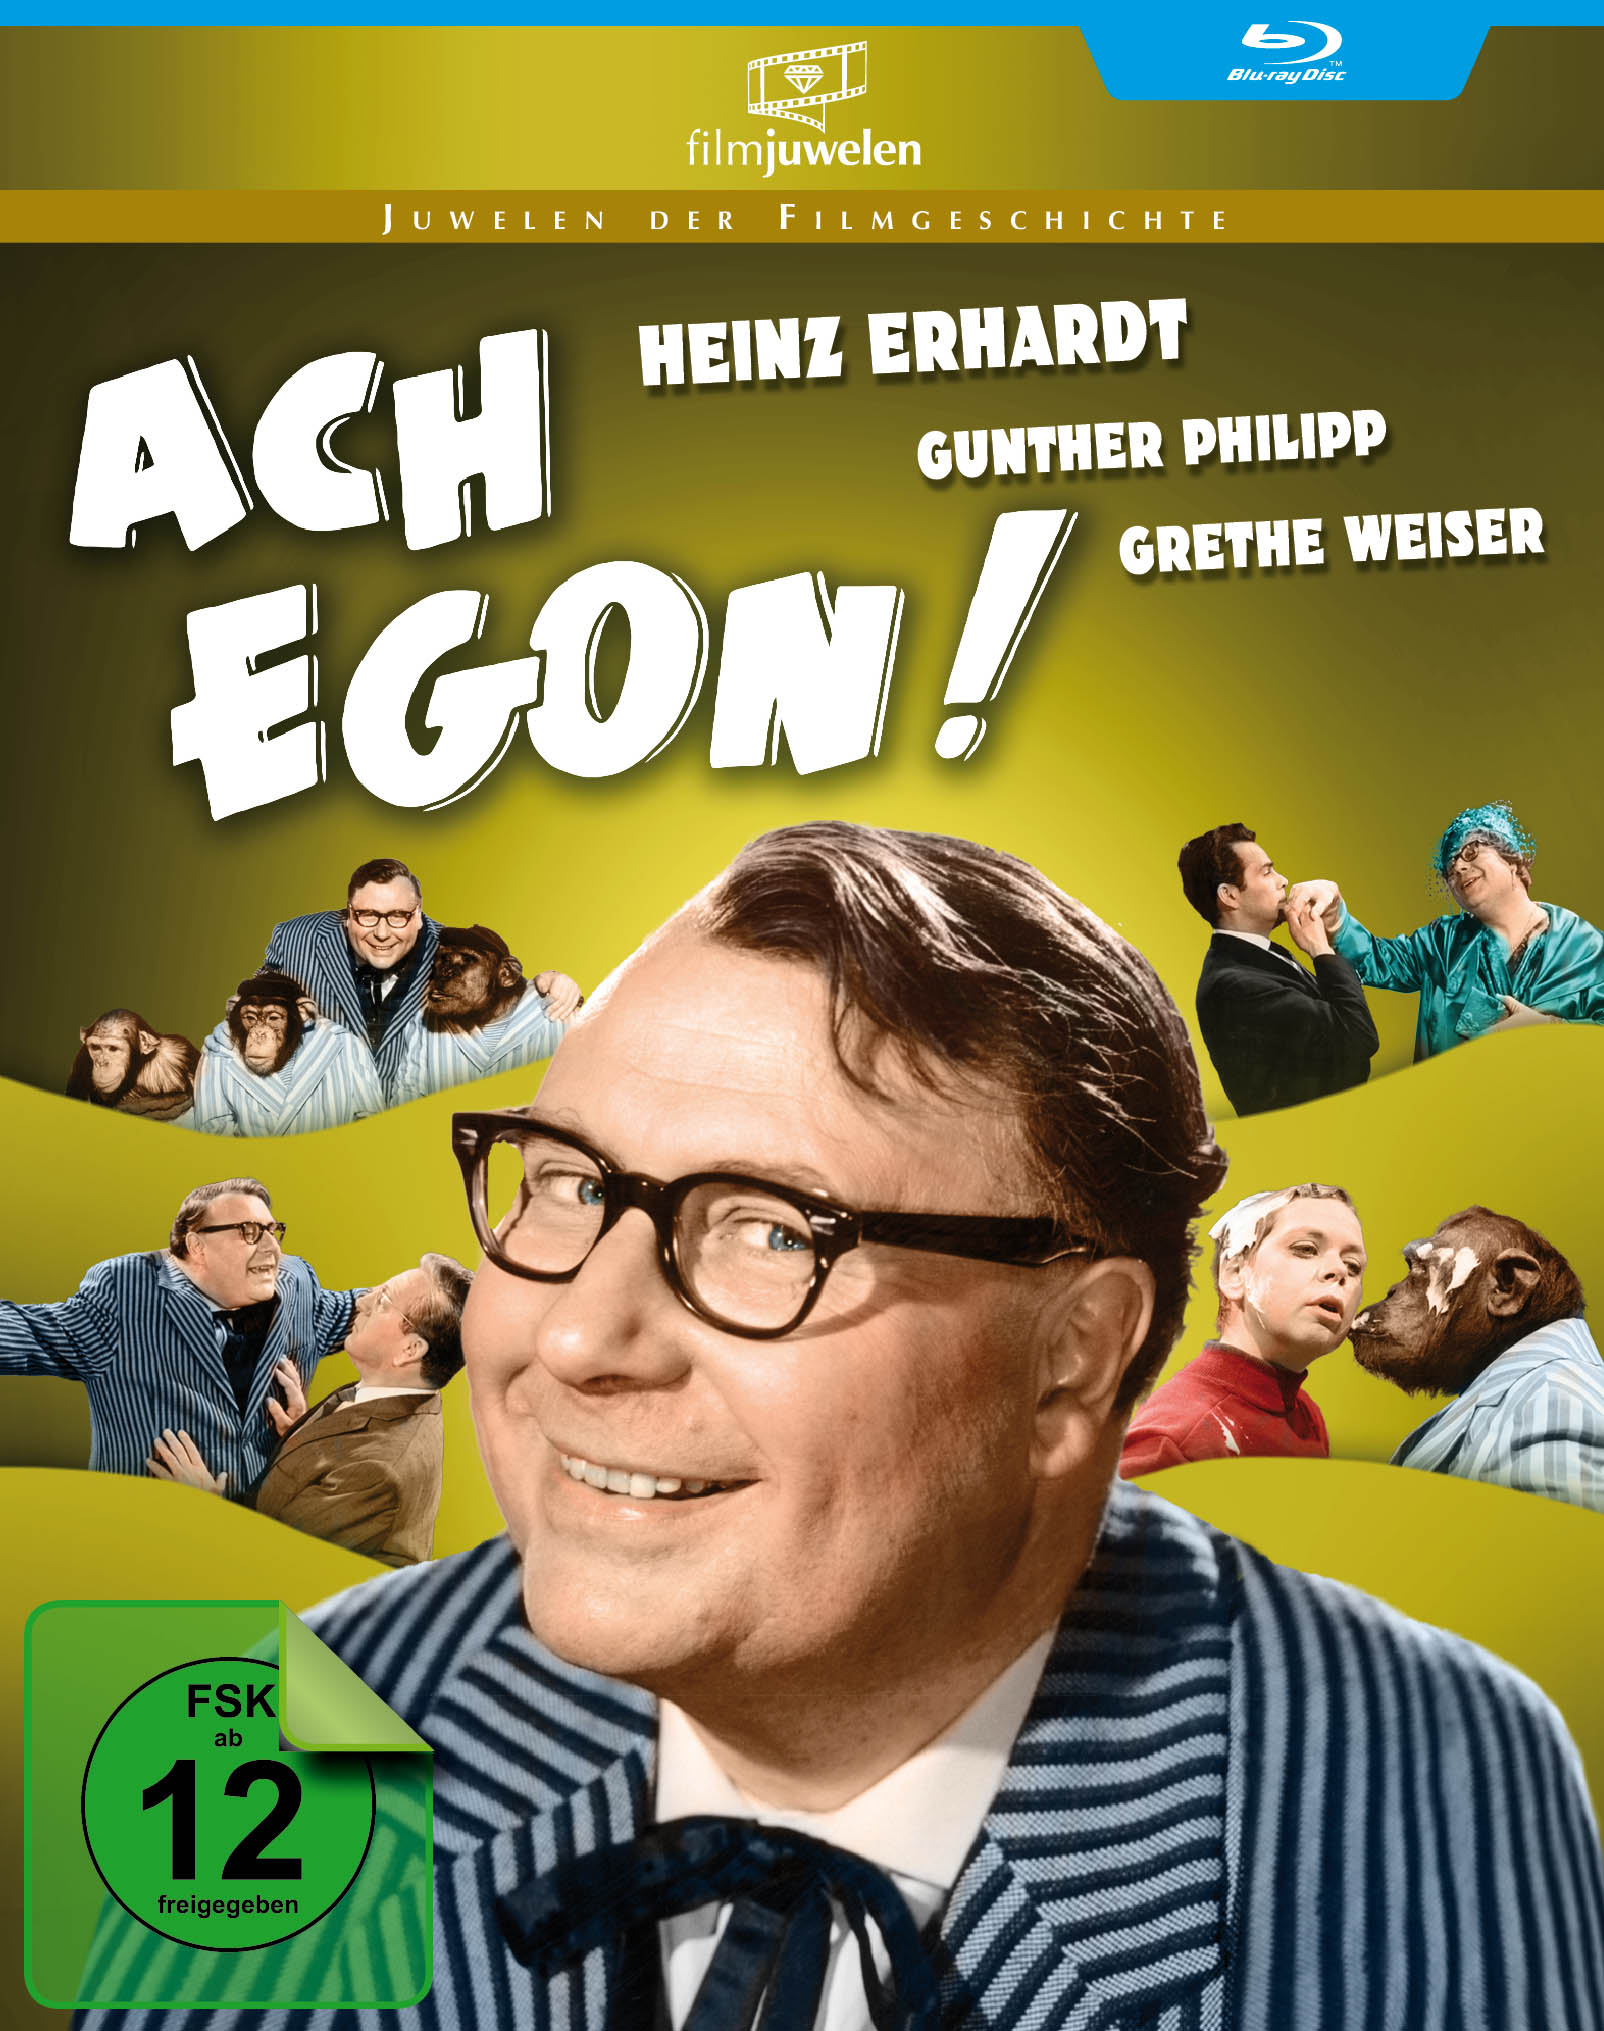 Ach Blu-ray Heinz Egon! Erhardt: